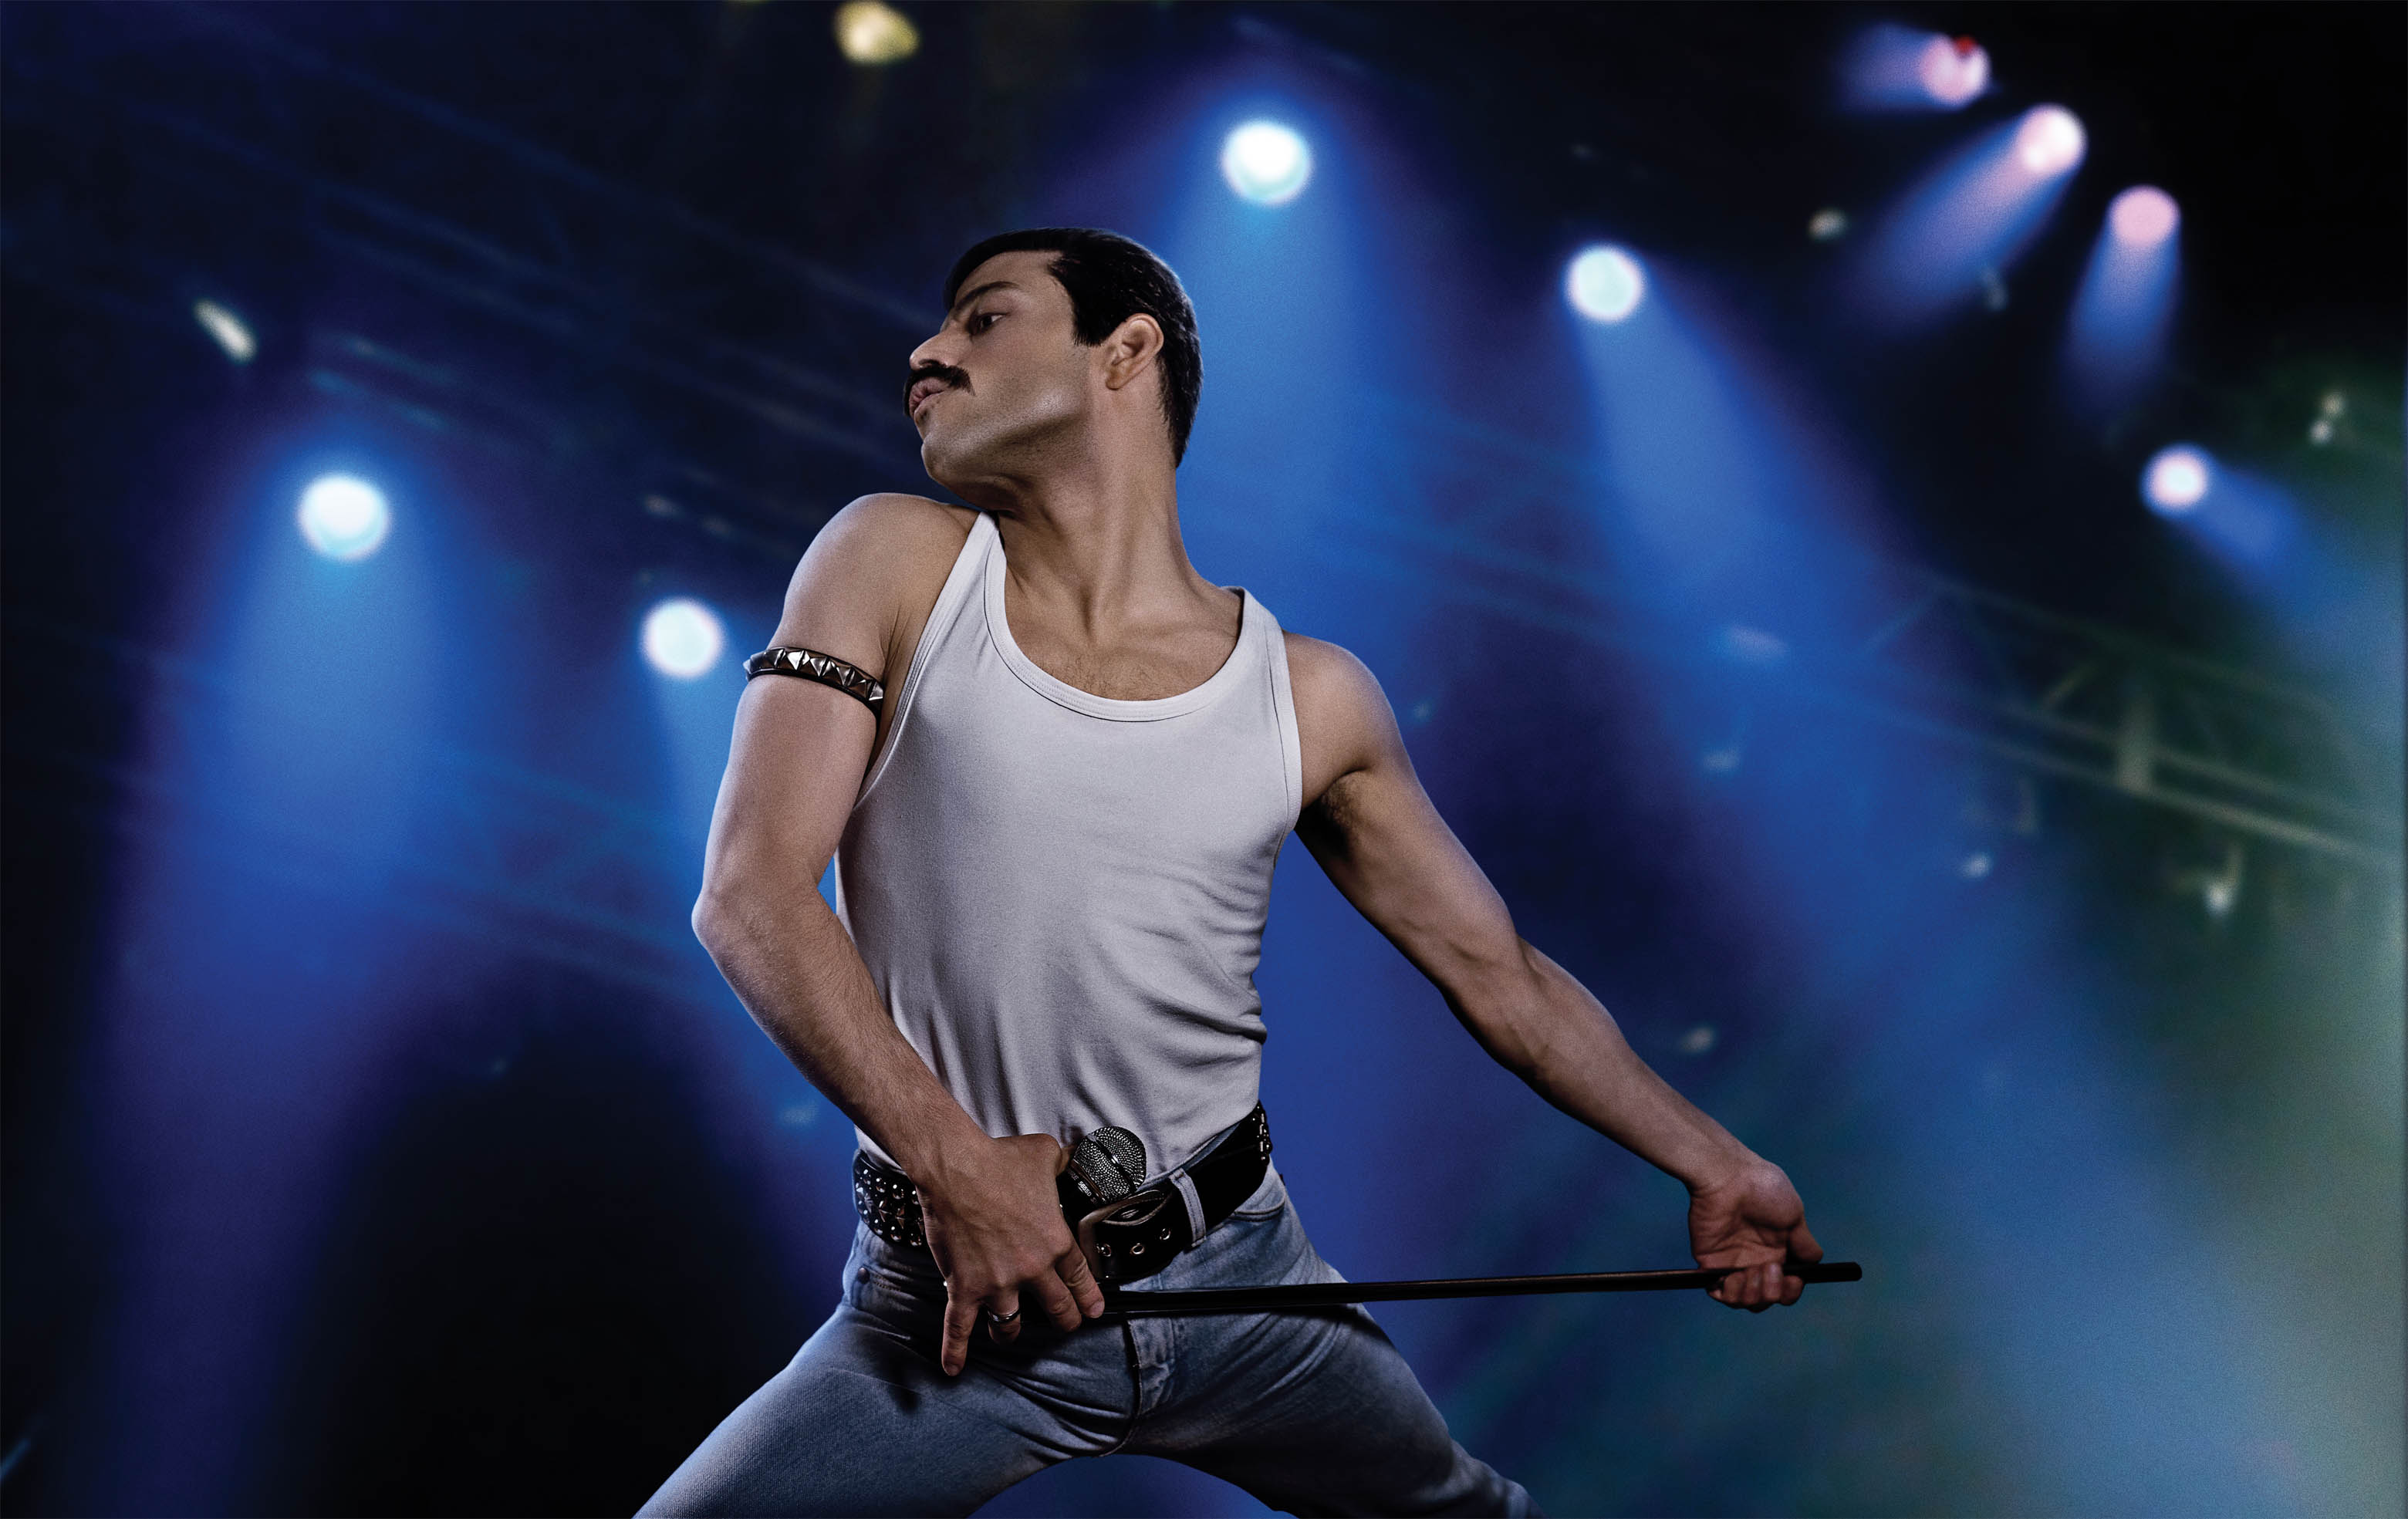 FREDDIE MERCURY. Rami Malek as the rock icon Freddie Mercury in 'Bohemian Rhapsody.' 